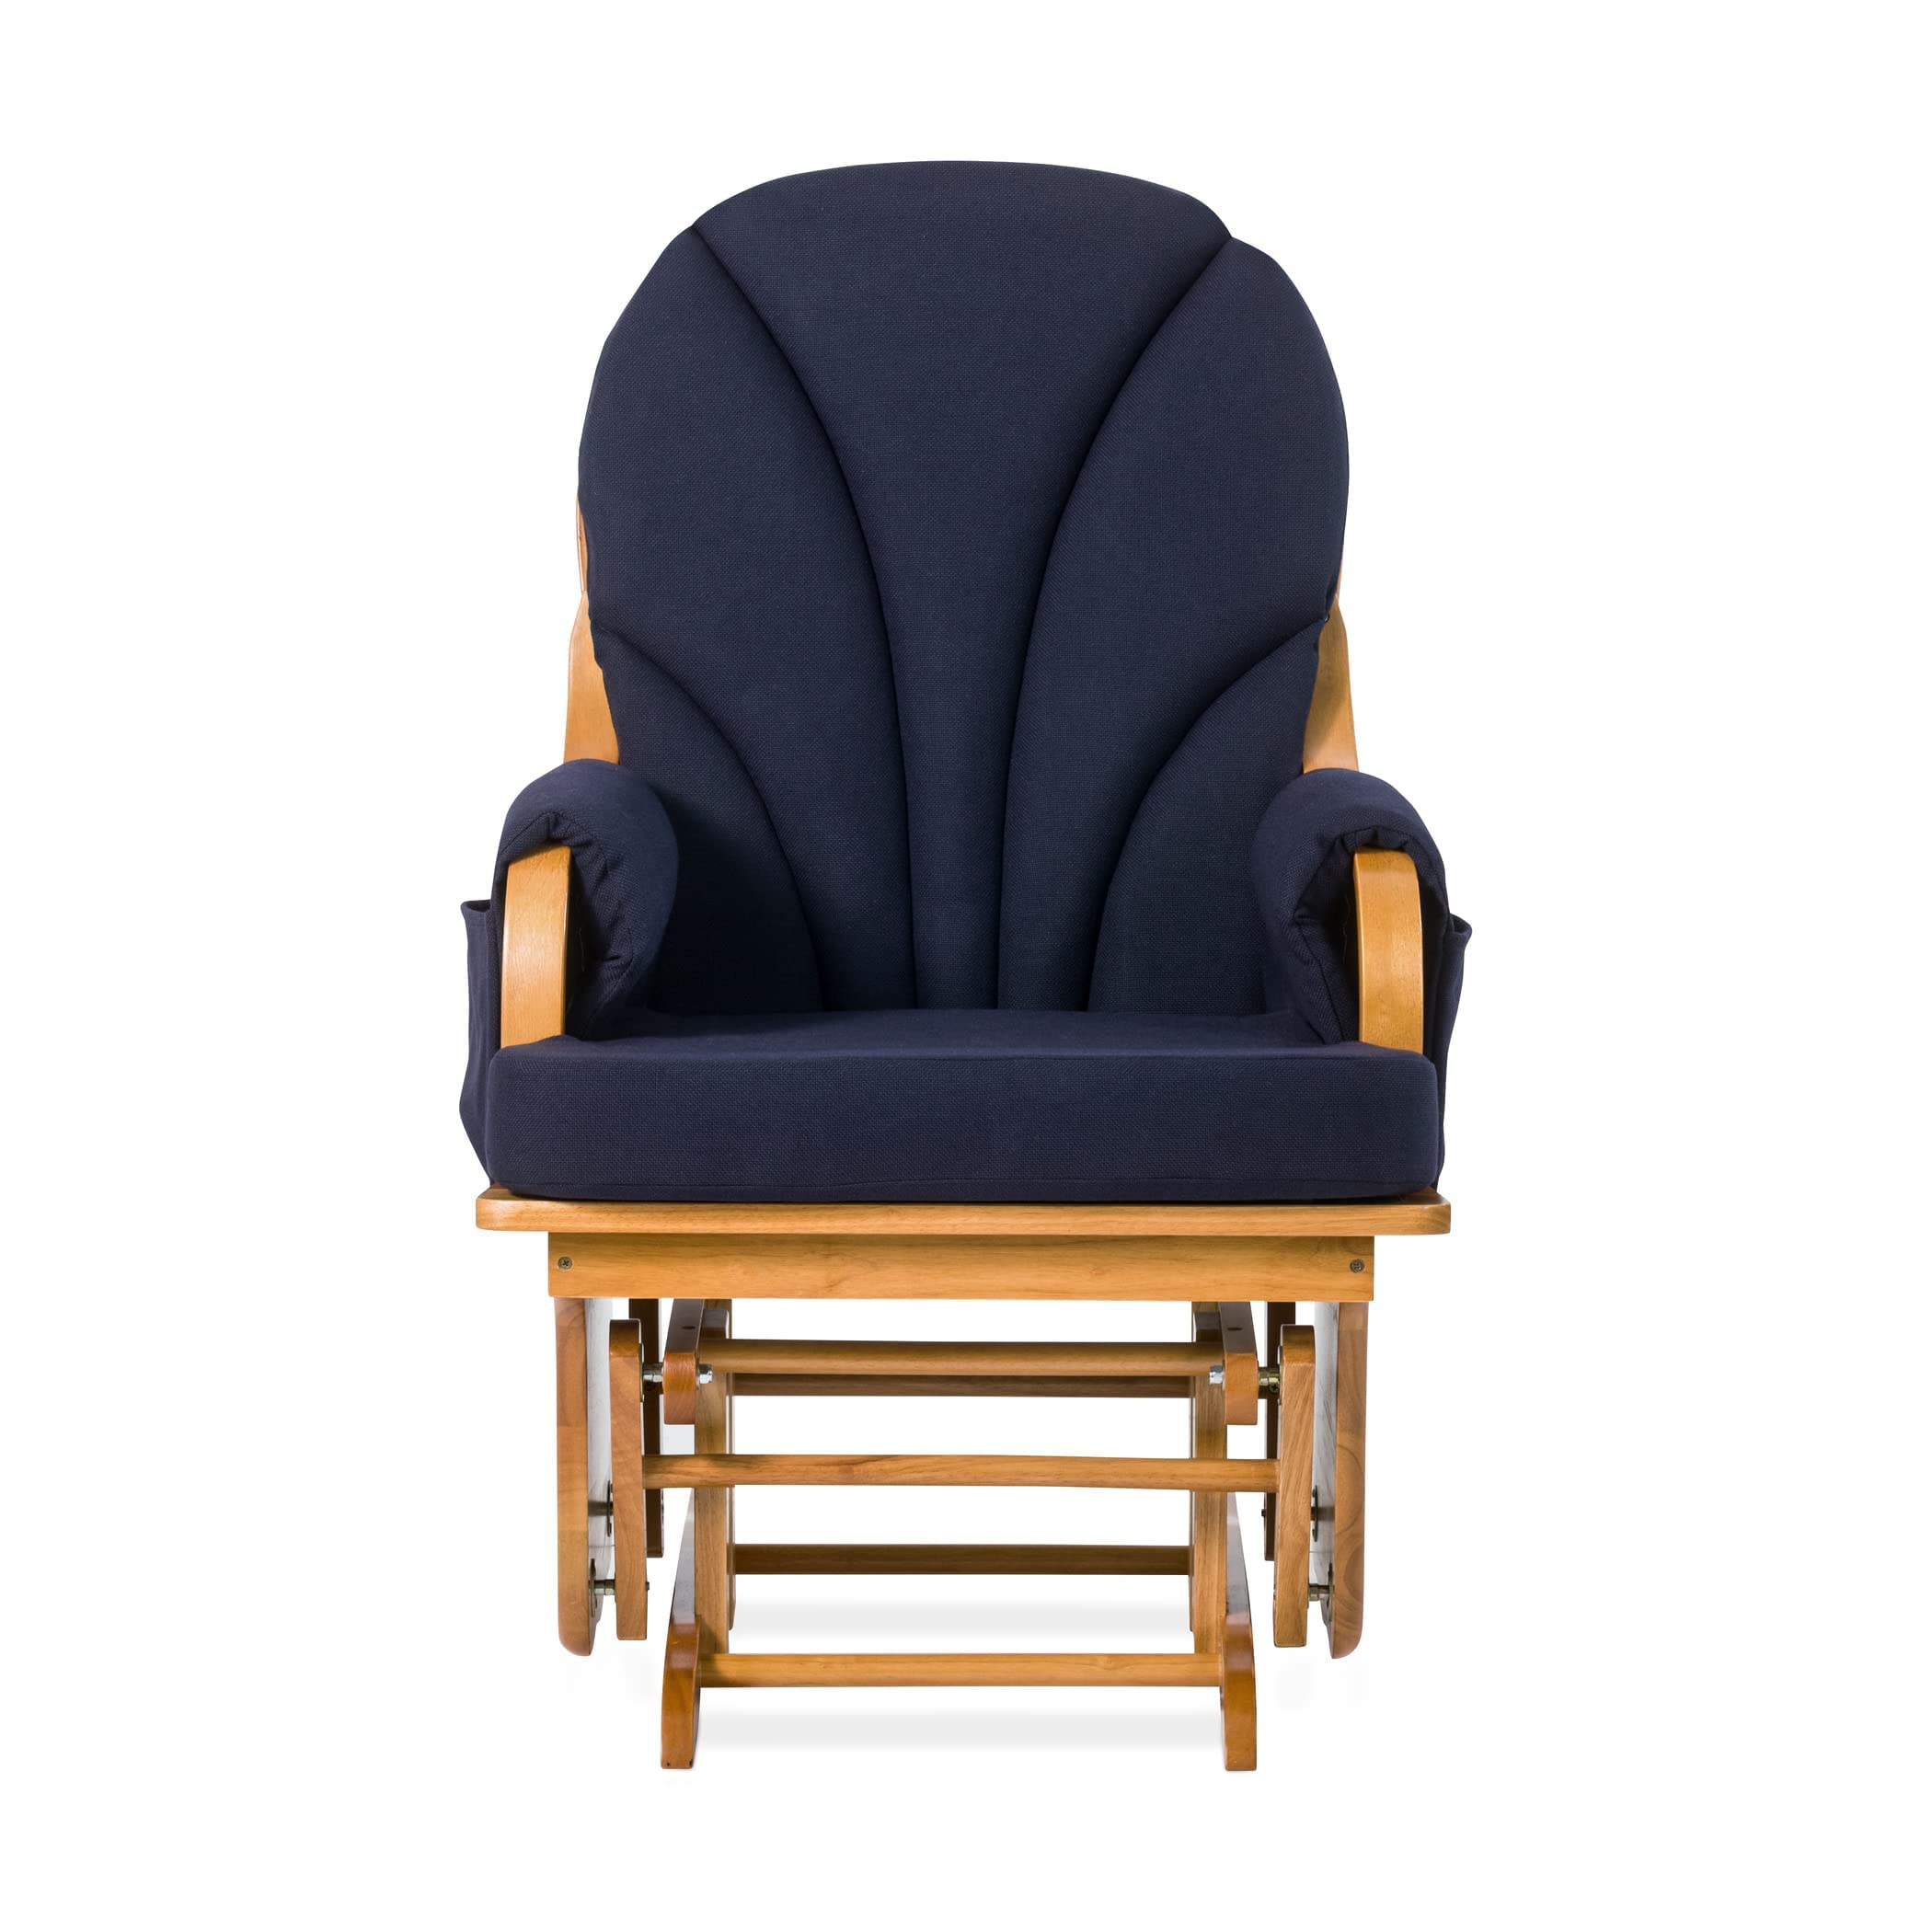 Foundations Lullaby Glider Rocker Chair for Nursery or Daycare, Solid Wood Base Frame, Padded Foam Arm Rests, Side Storage Pockets, Designed for Comfort (Natural/Blue)